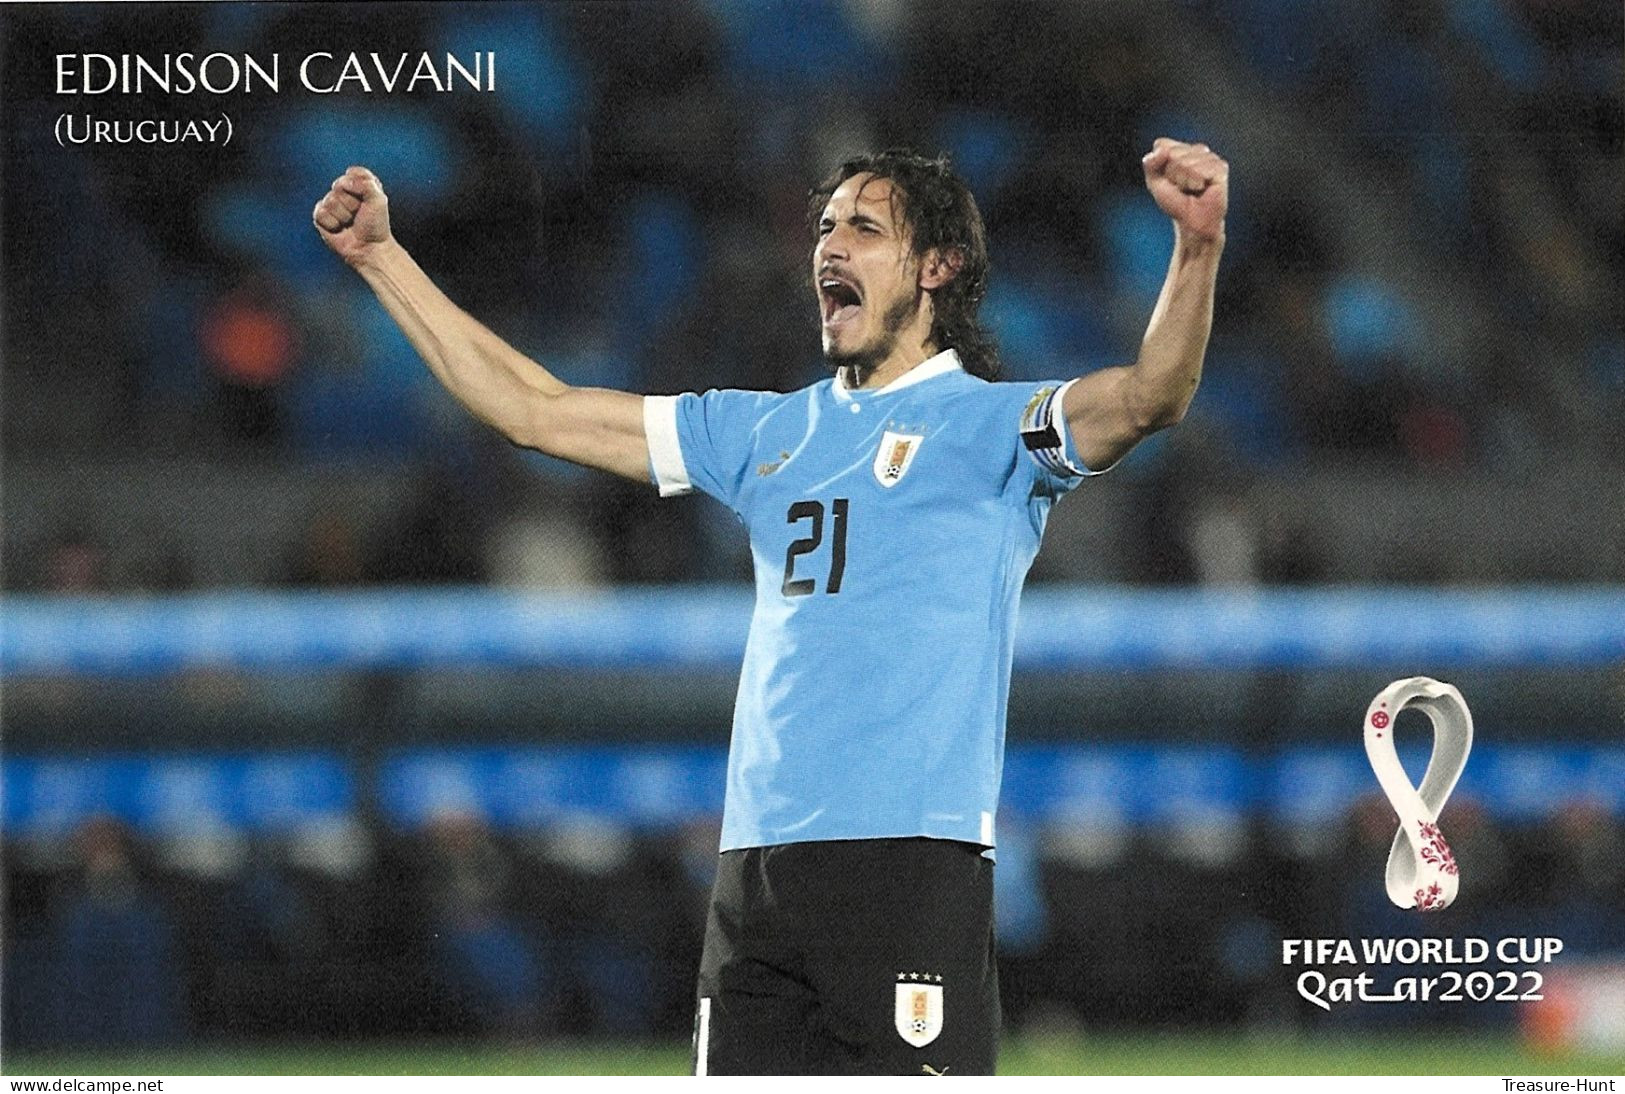 RARE Collector's Edition Picture POSTCARD - 2022 FIFA World Cup Soccer Football In Qatar - Uruguay Player Edinson Cavani - 2022 – Qatar